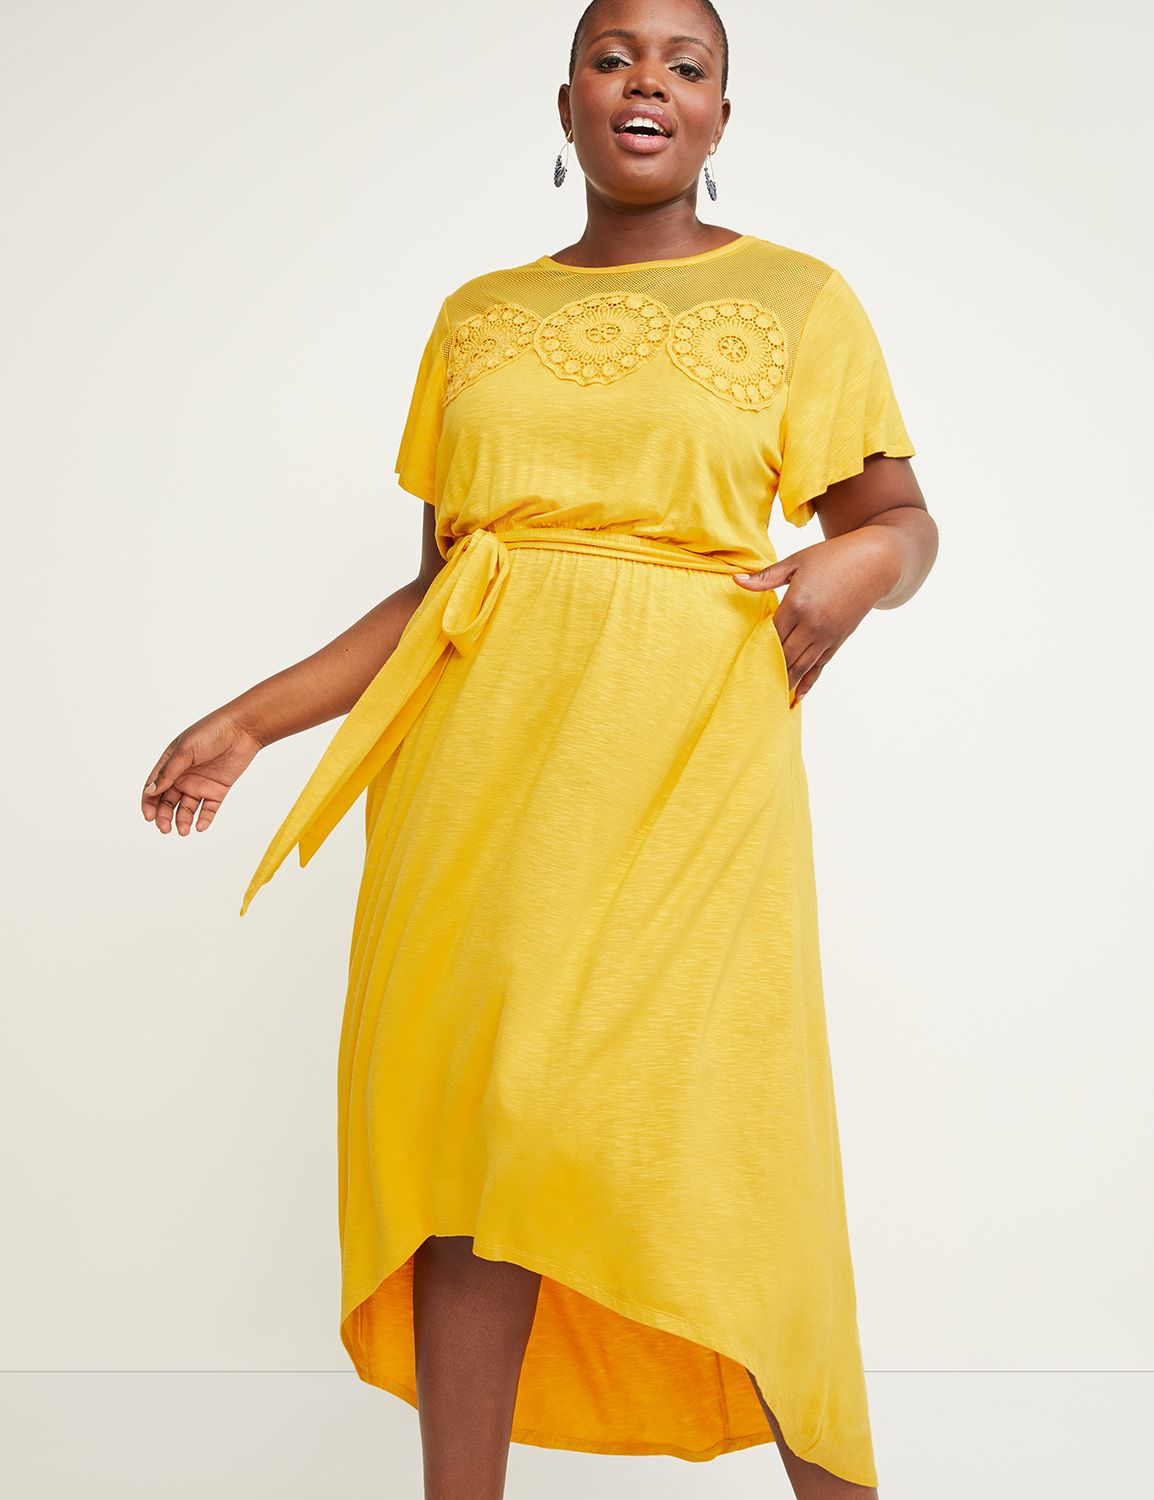 lane bryant yellow dress